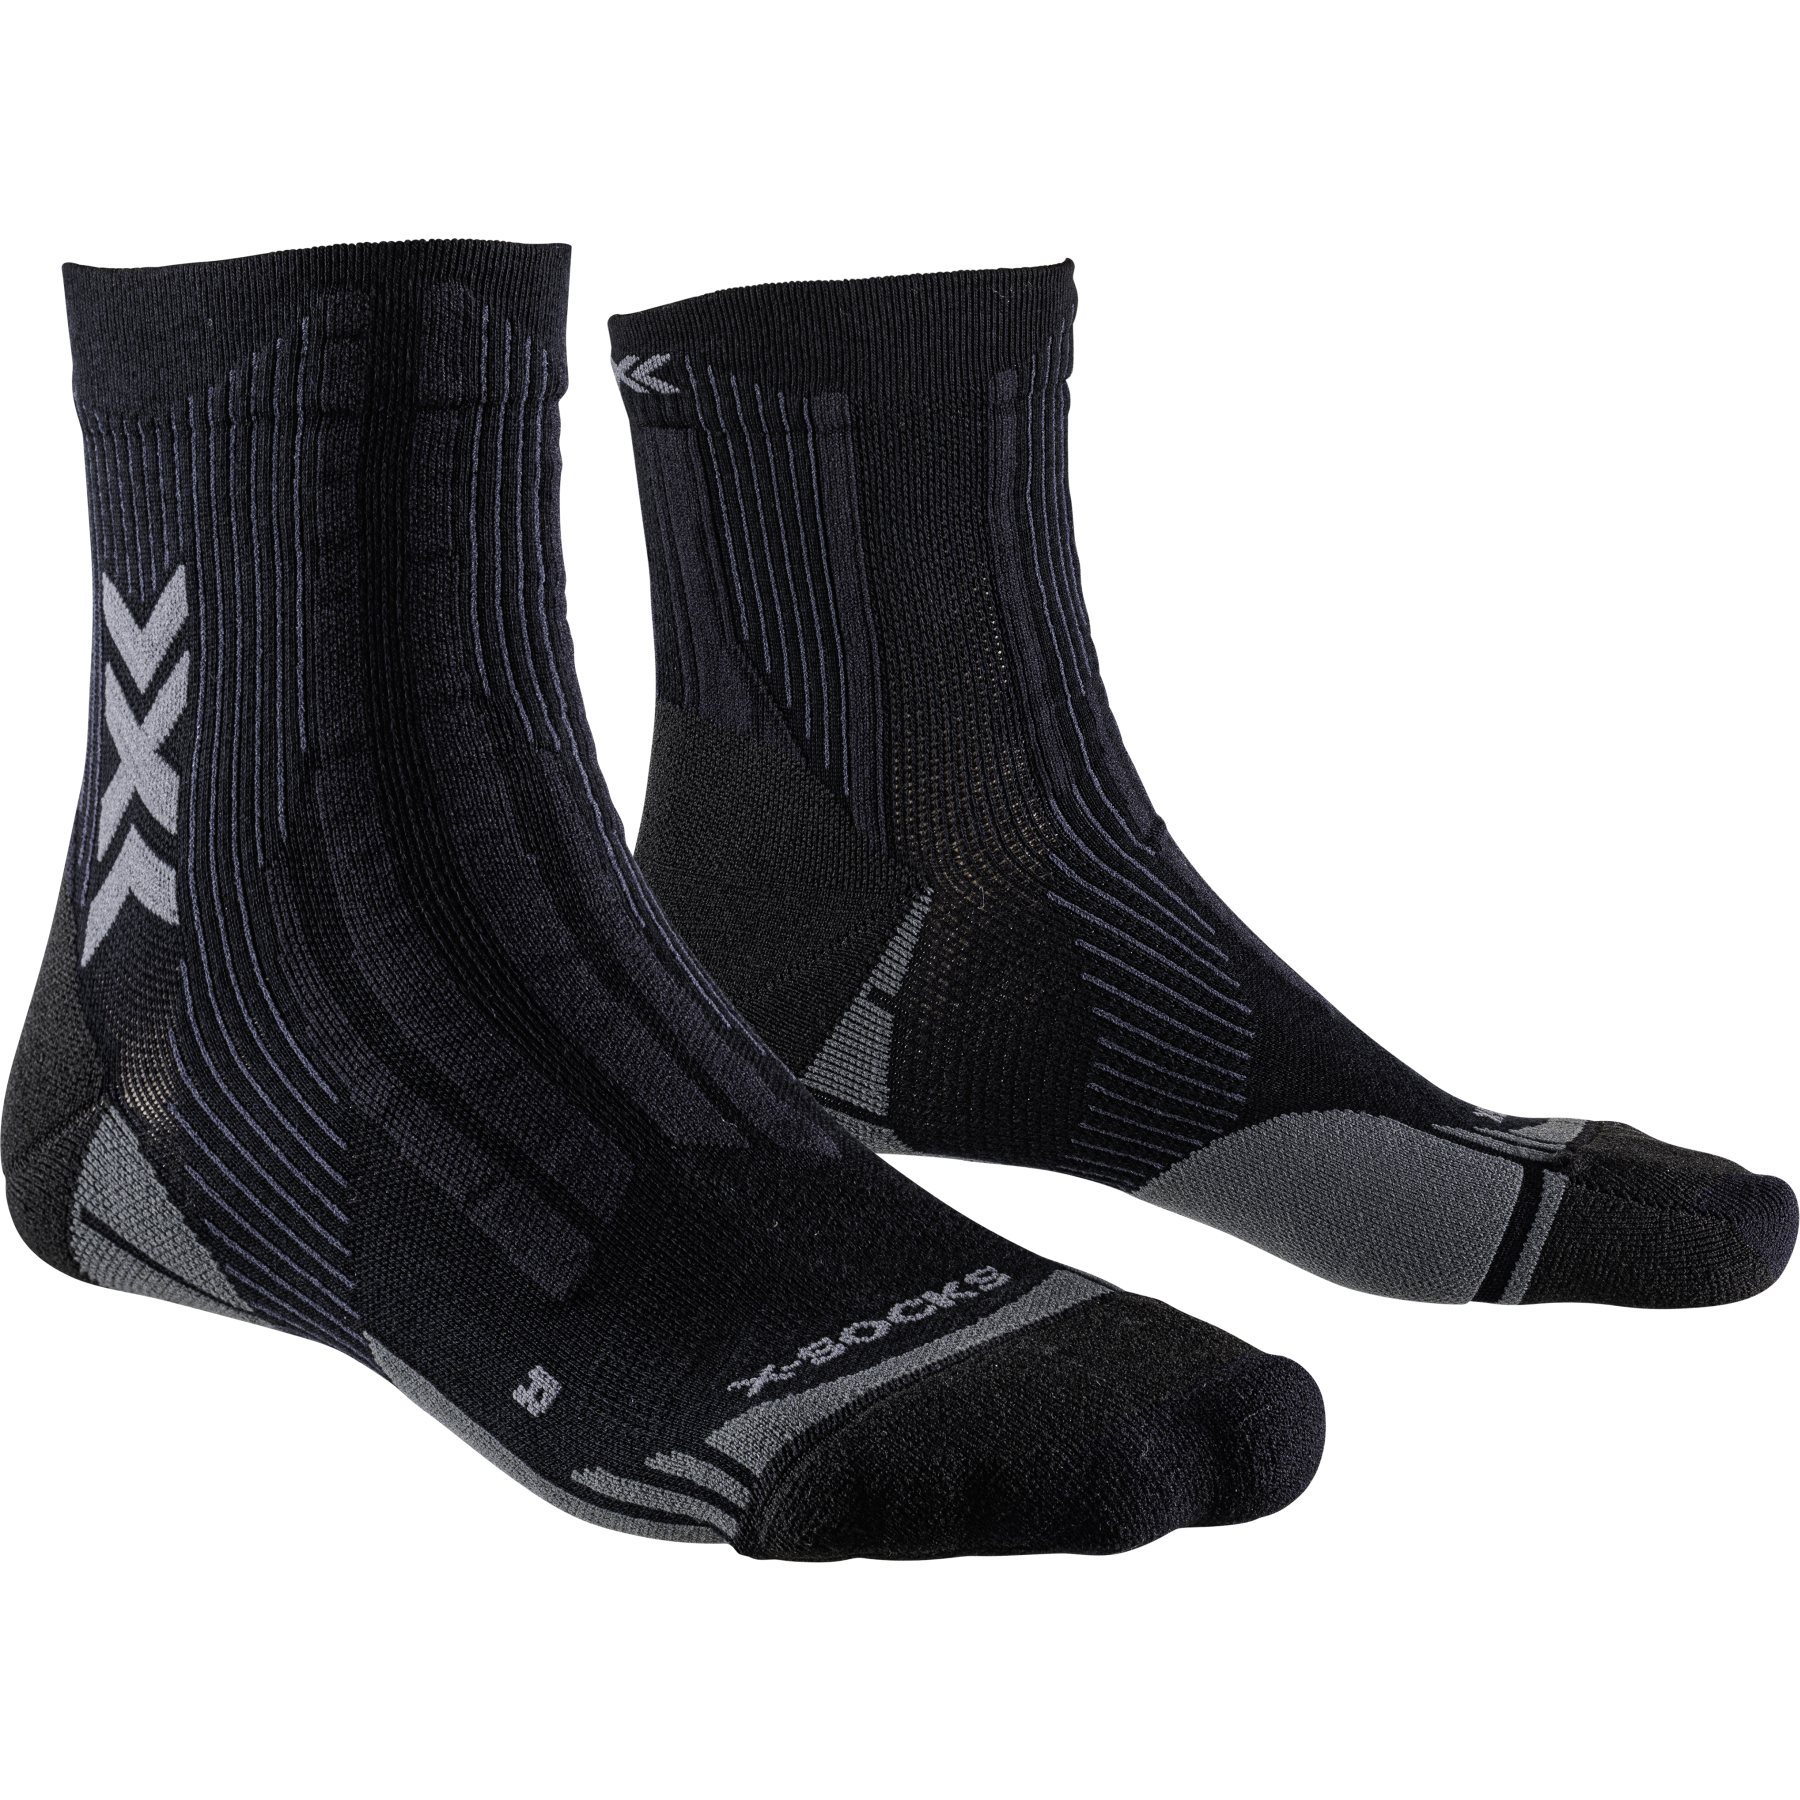 Productfoto van X-Socks Hike Perform Natural Ankle Sokken - black/charcoal